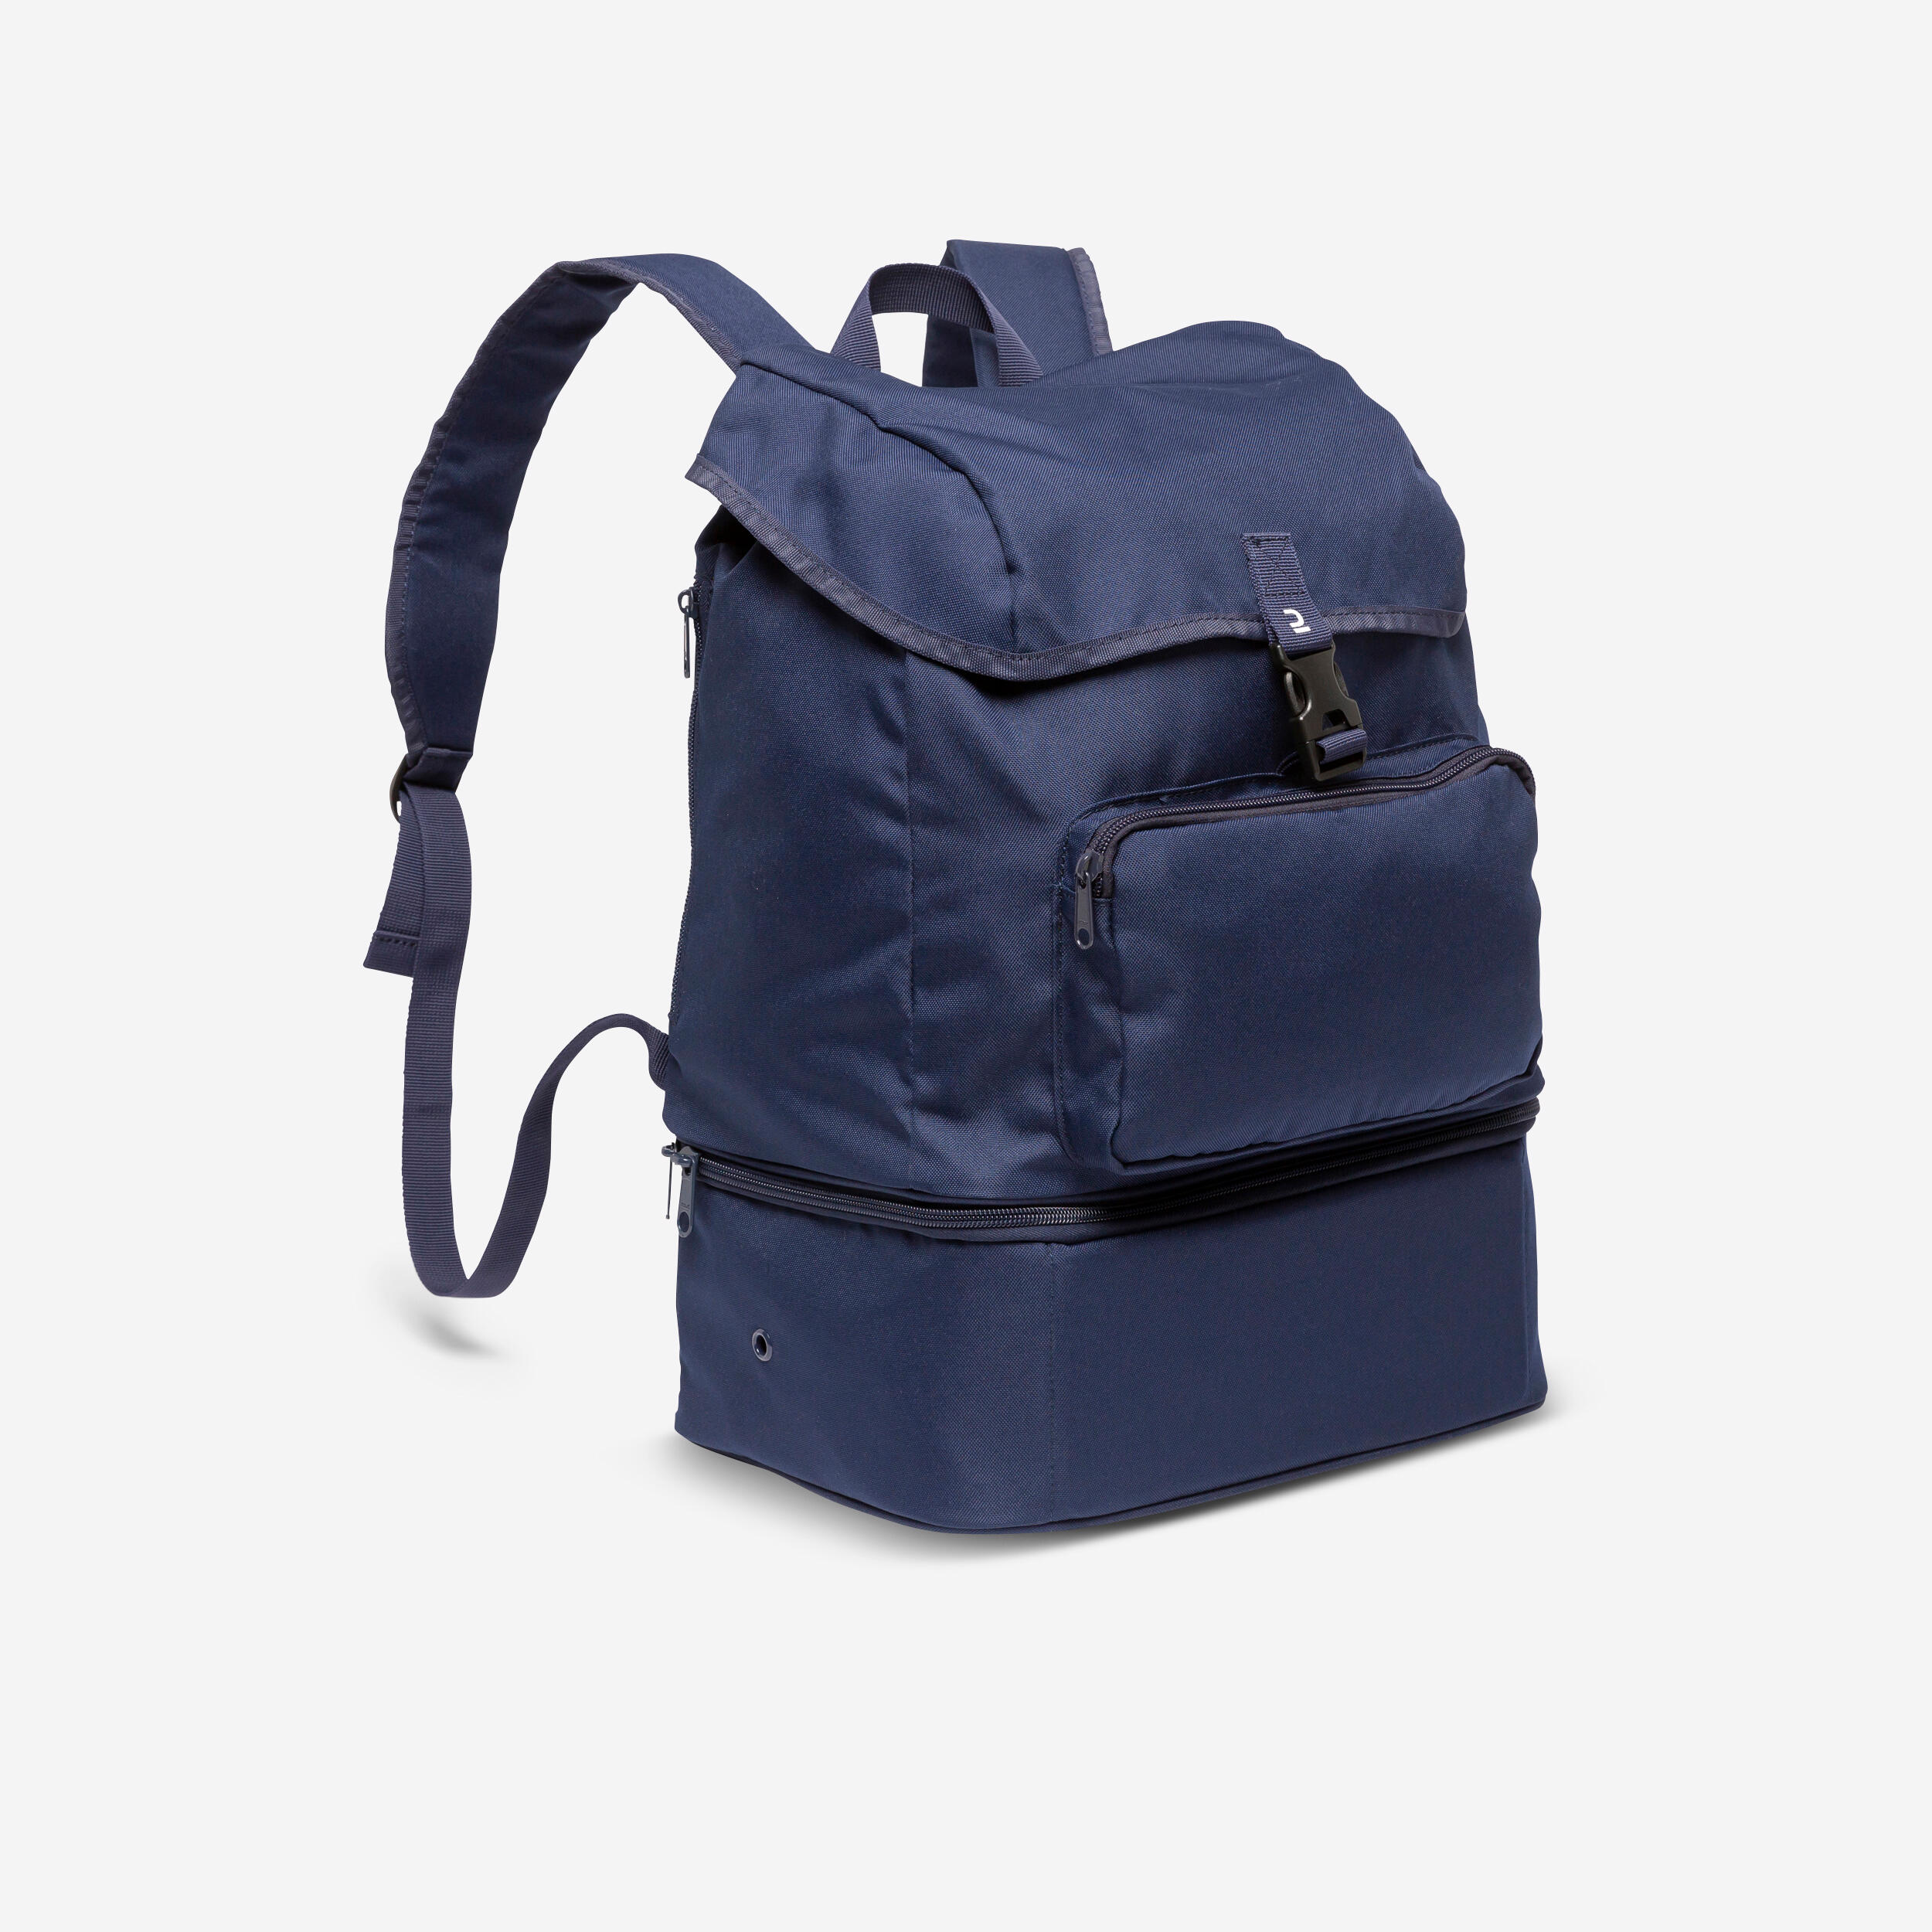 sac à dos hardcase 30 litres bleu marine - kipsta